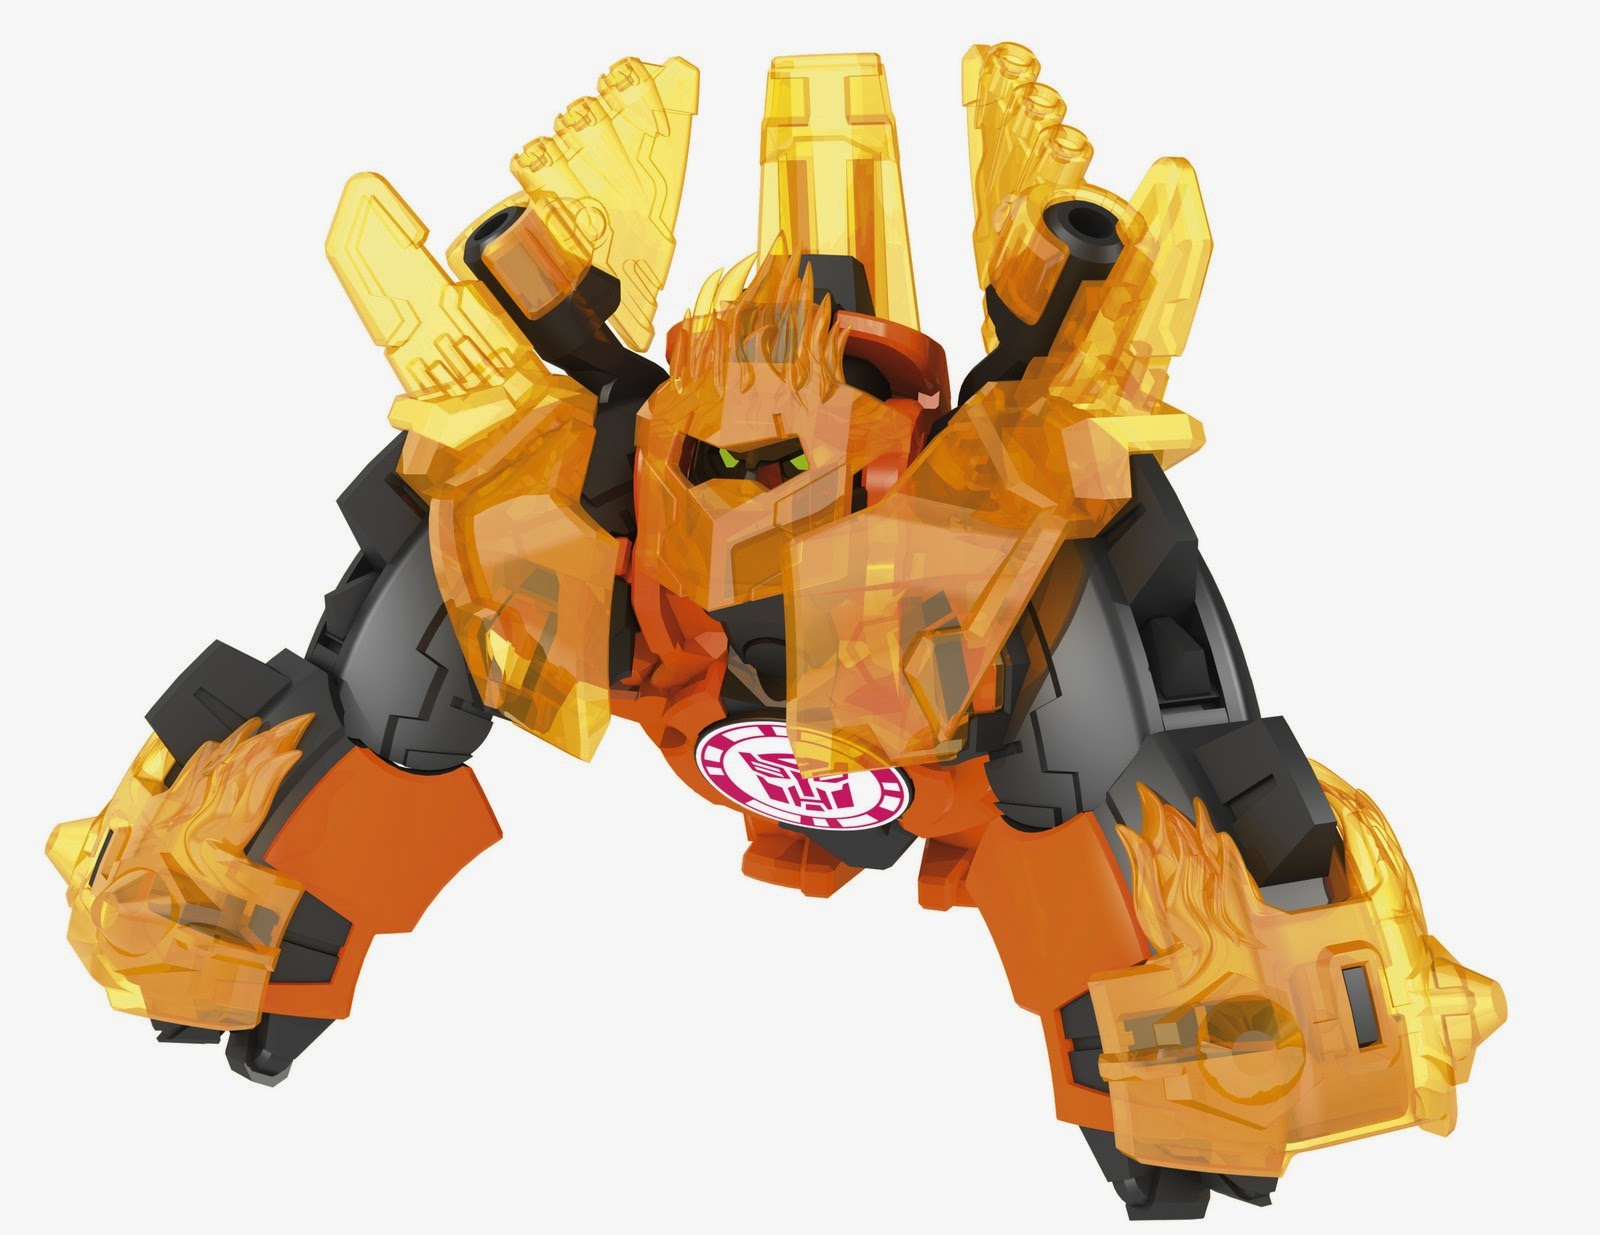 Код transformers. Transformers Robots in Disguise игрушки Hasbro. Игрушки коды трансформеры роботы под прикрытием. Трансформеры роботы под прикрытием Хаммер. Трансформеры роботы под прикрытием Мегазавр.